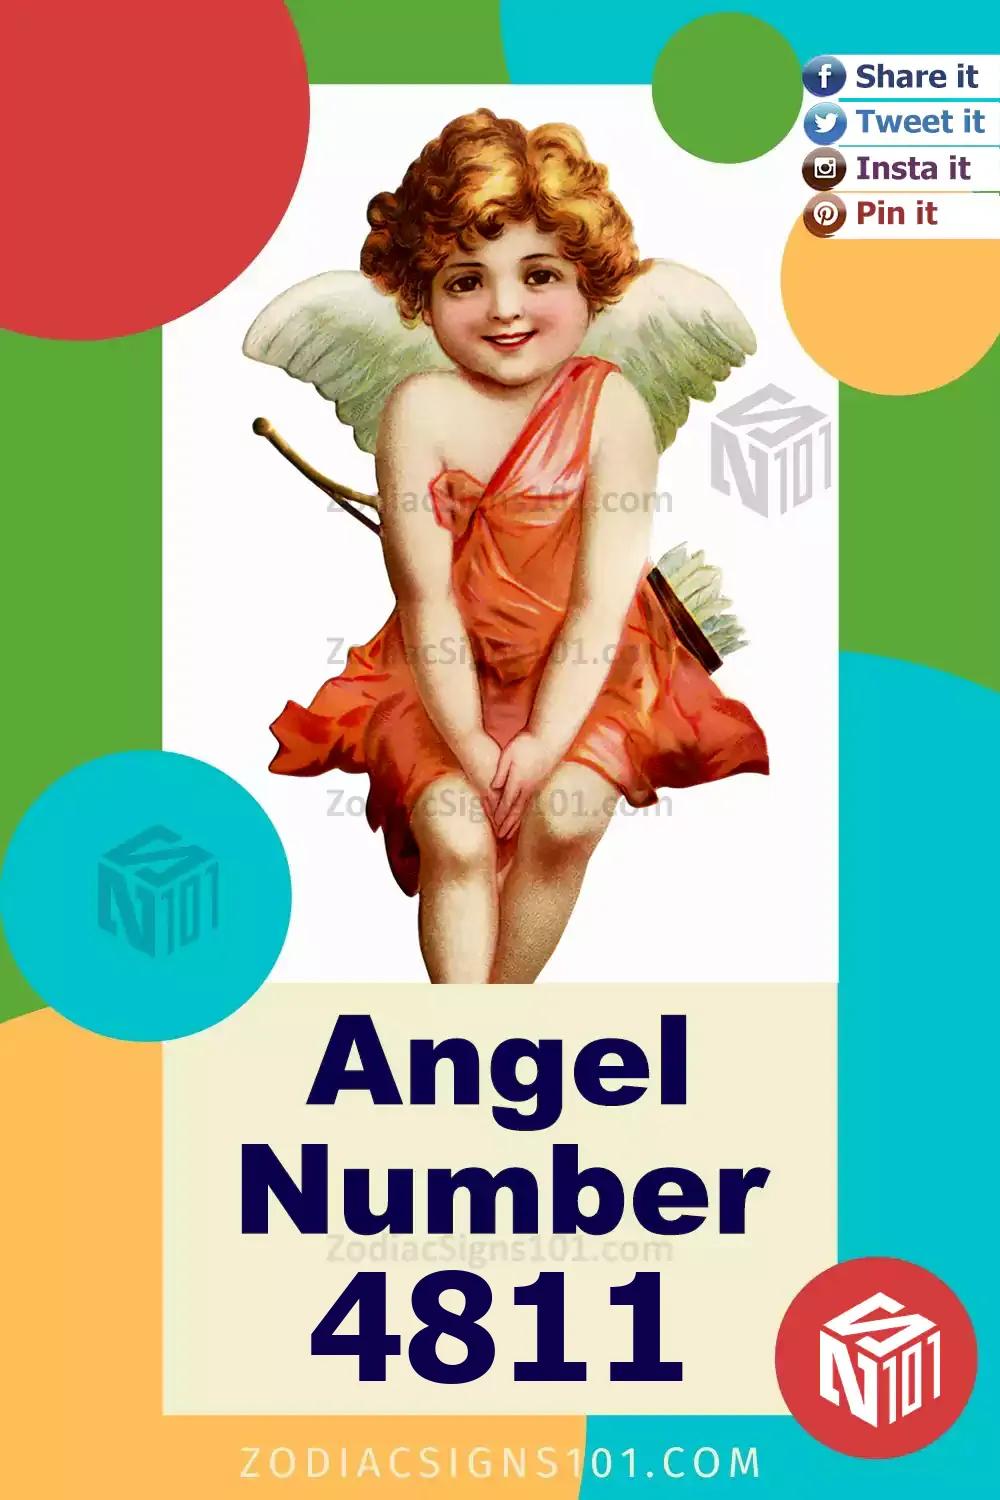 4811-Angel-Number-Meaning.jpg